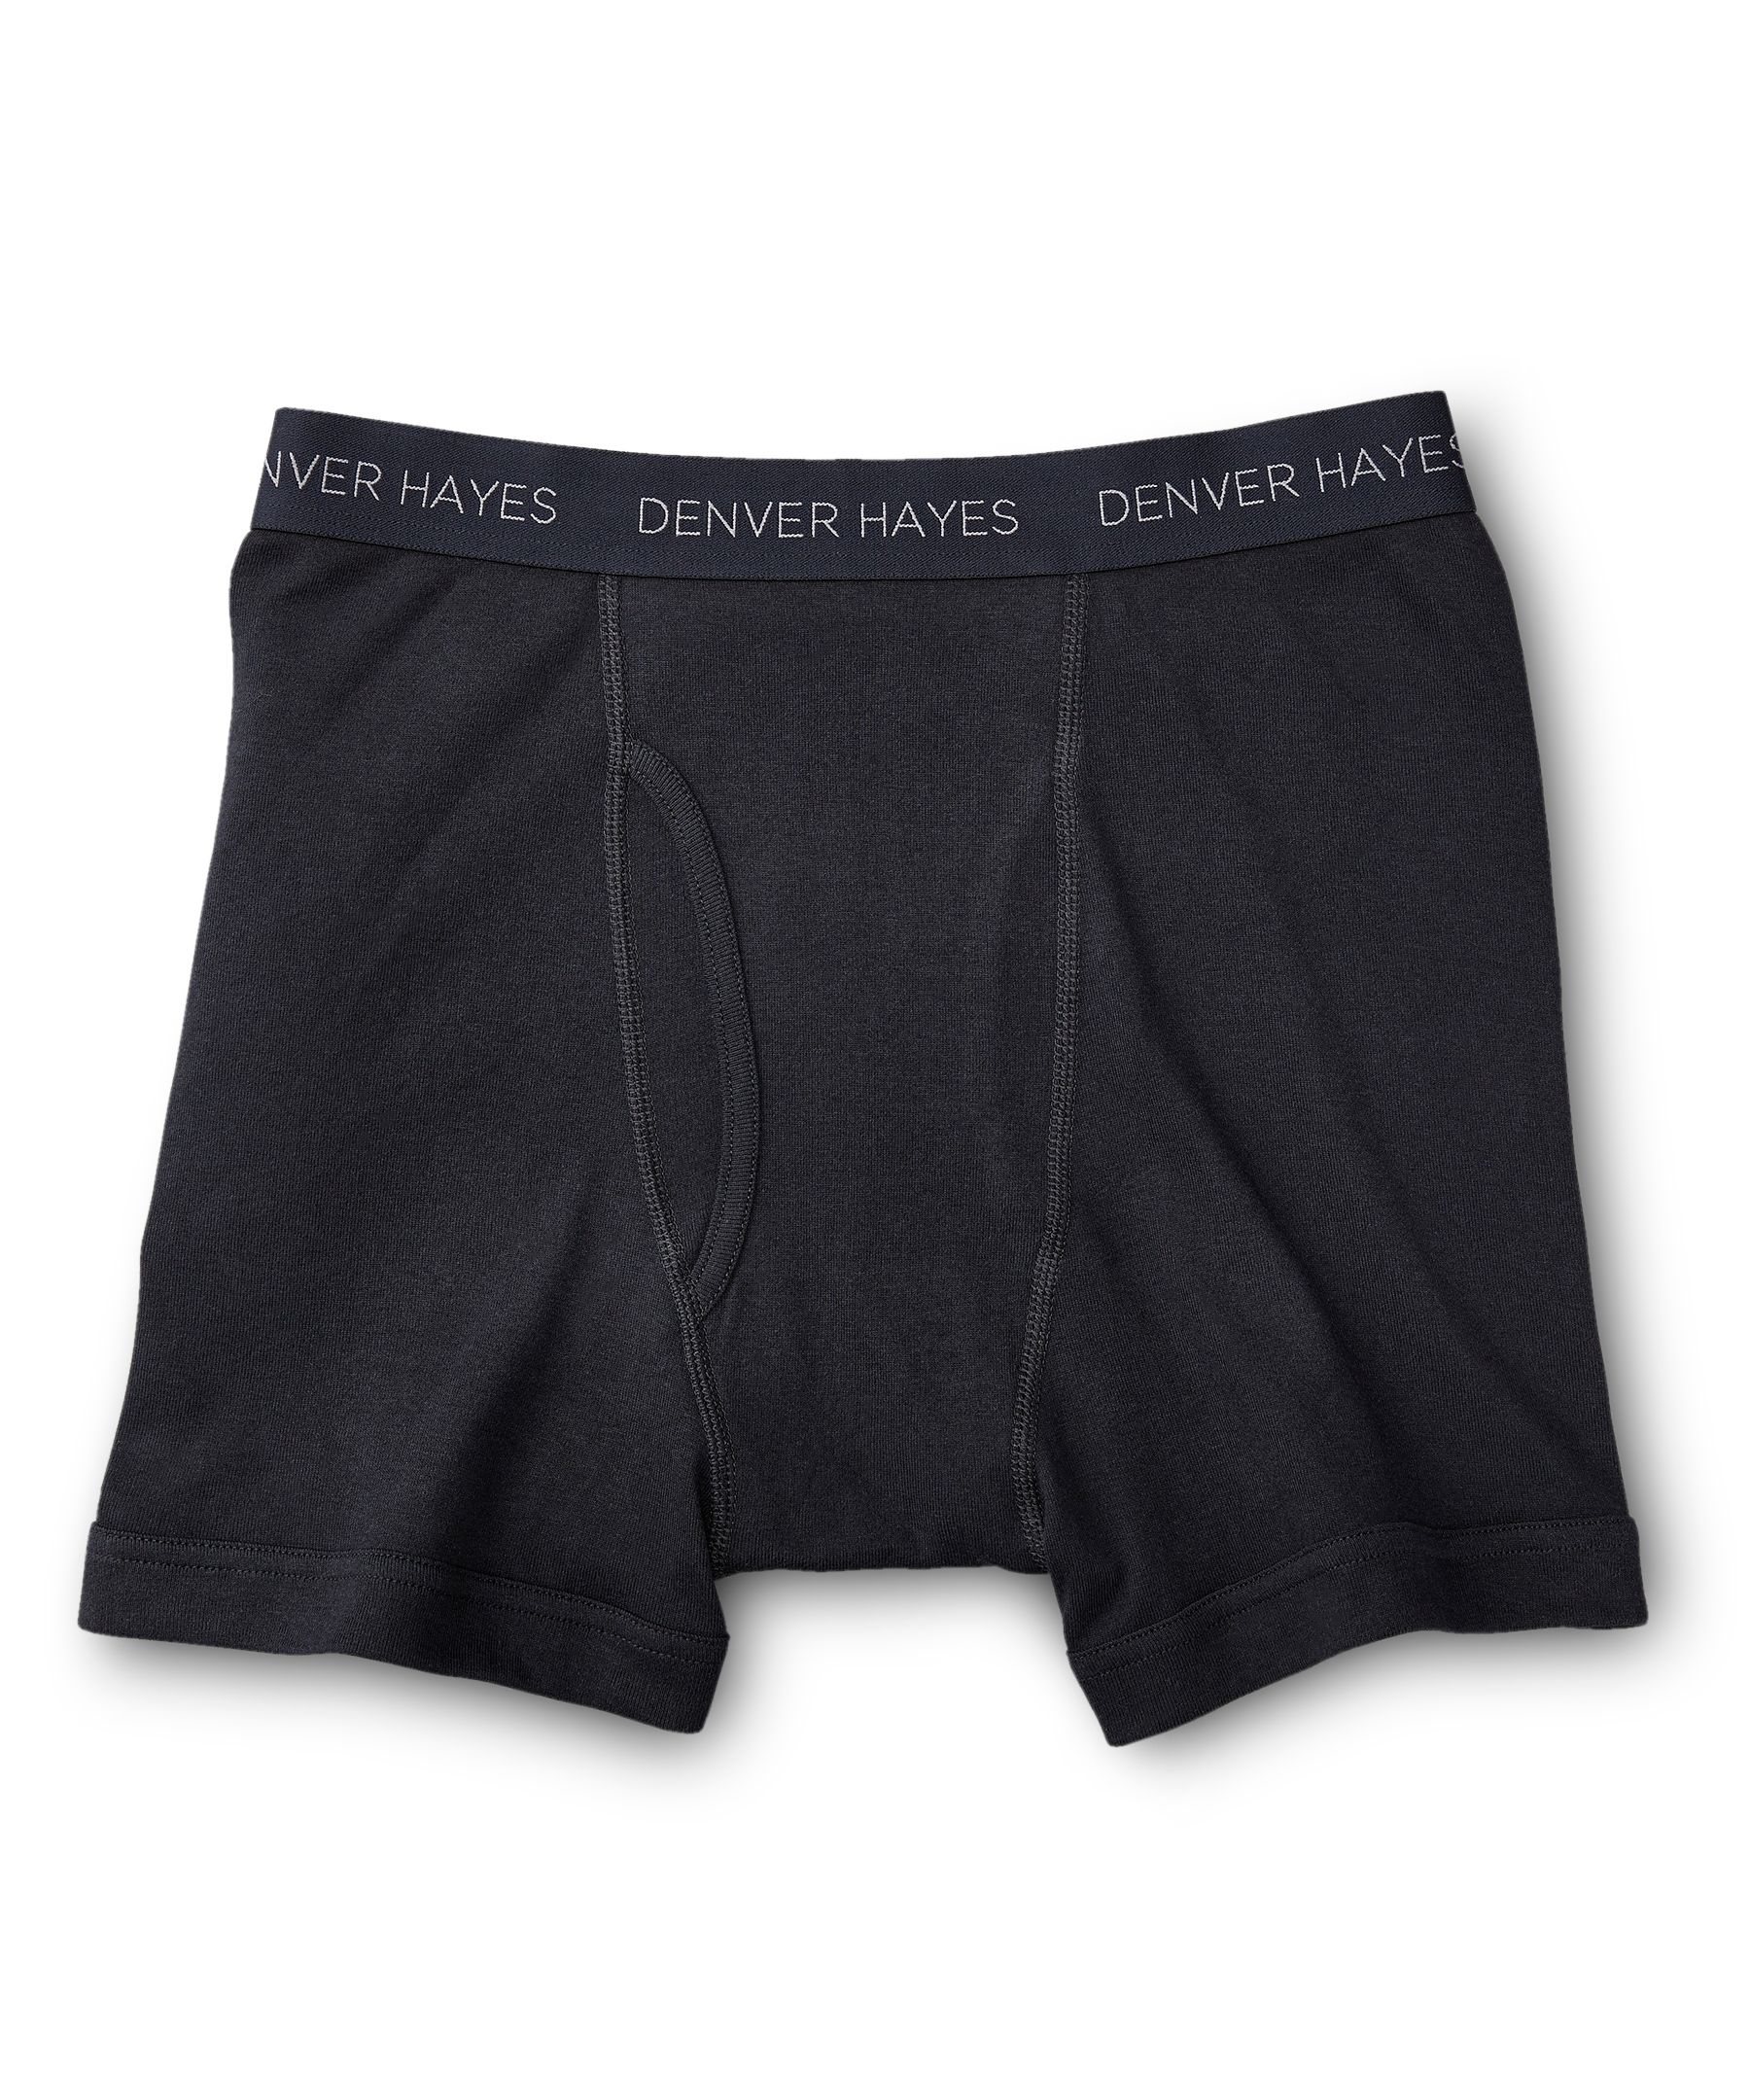 Denver Hayes Men's 3 Pack Underwear Classic Boxer Briefs